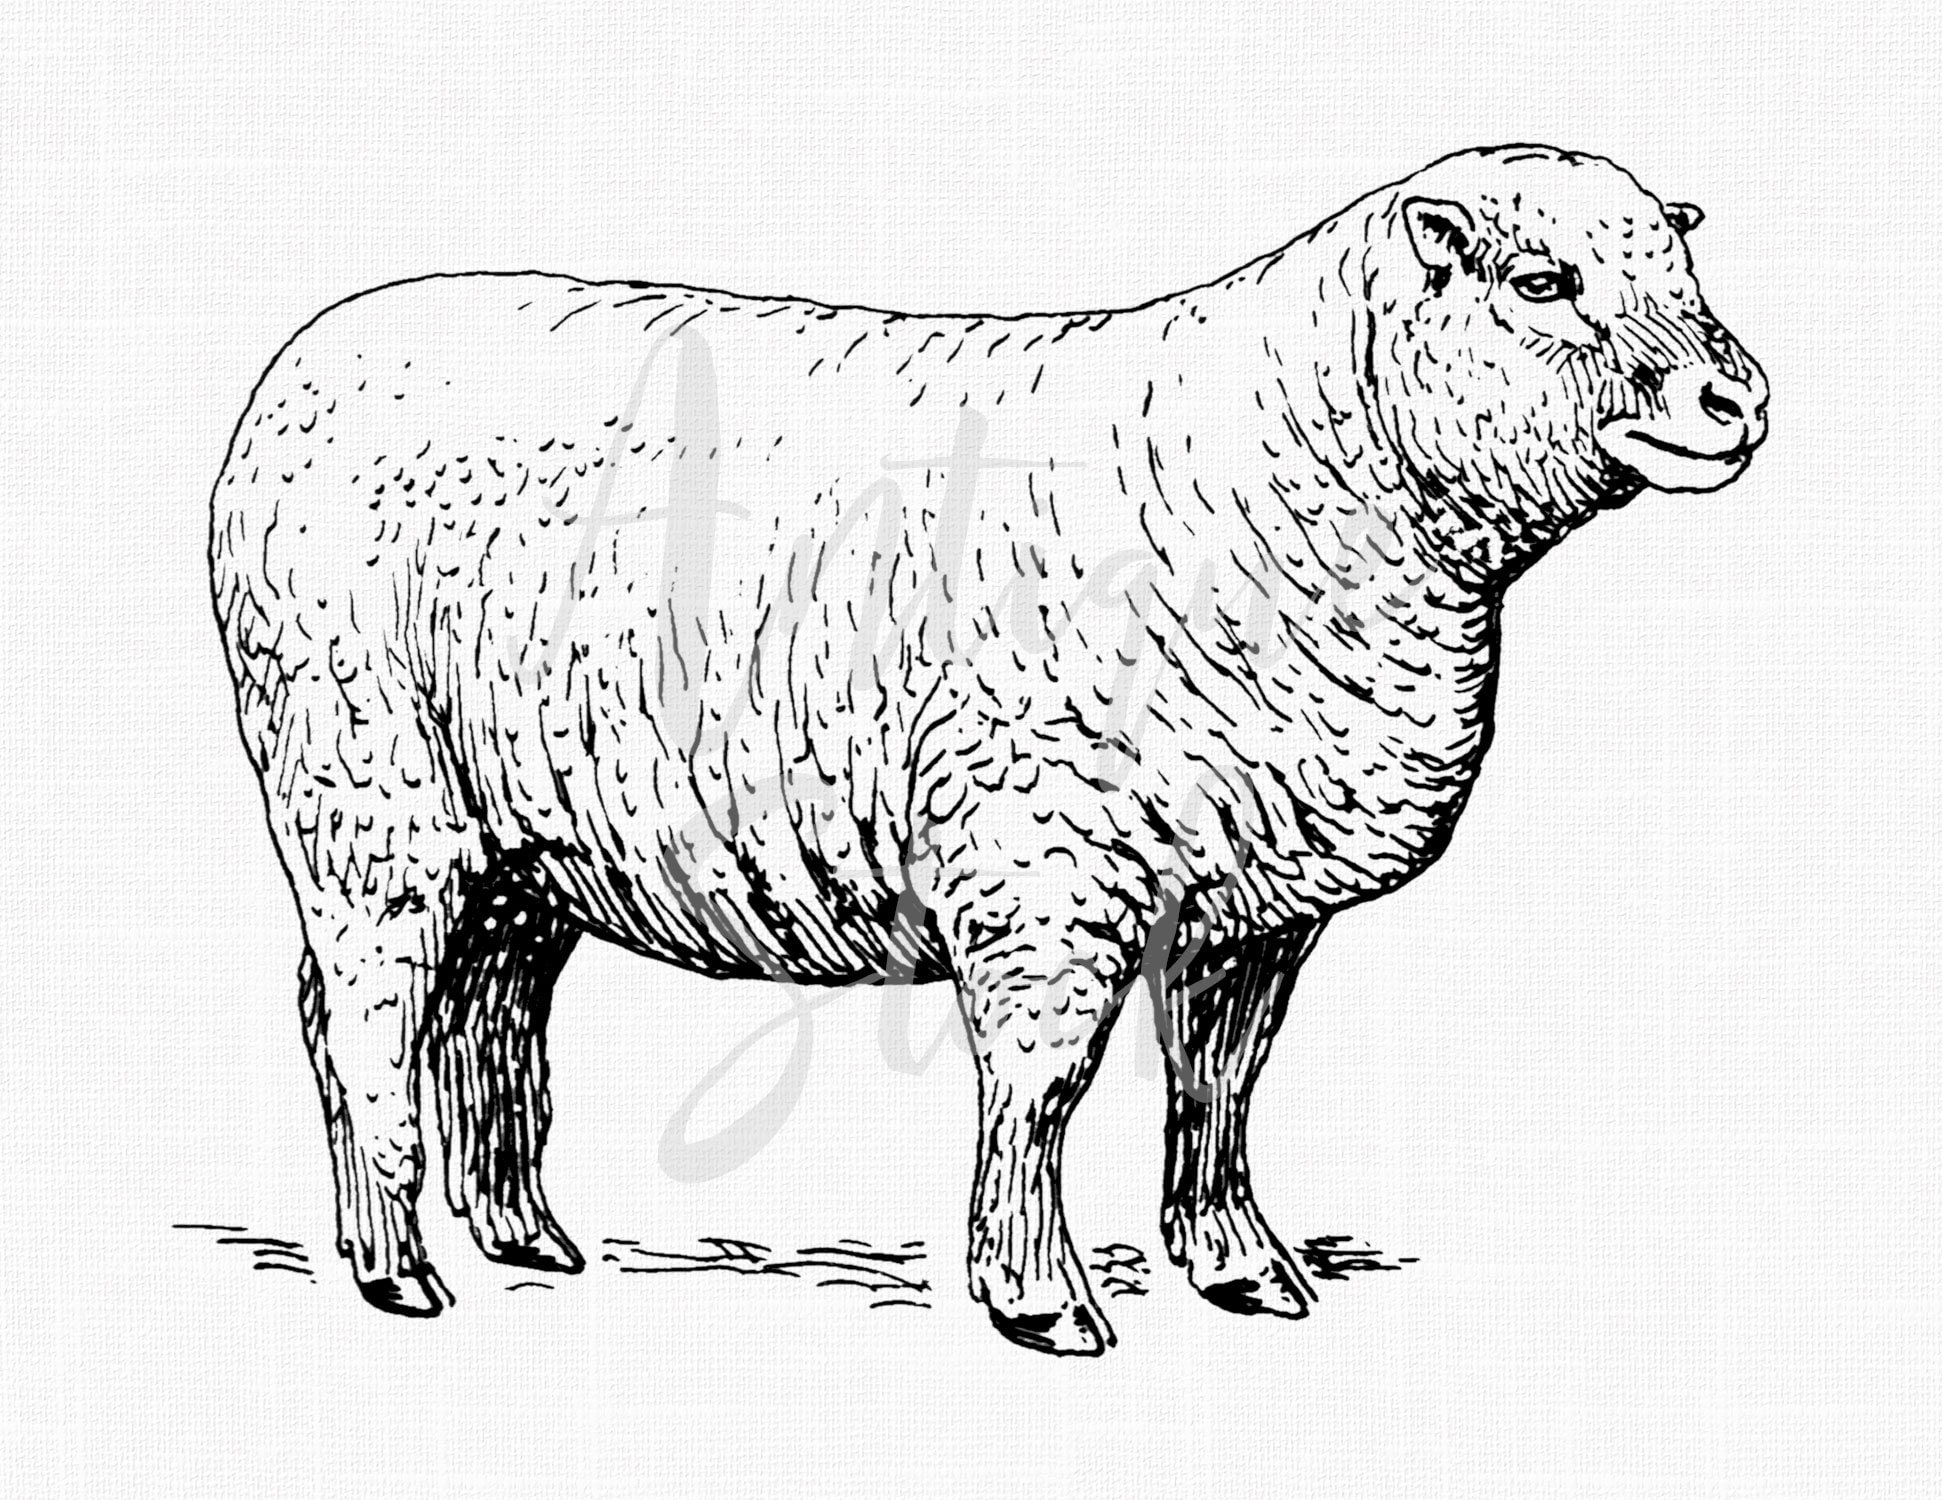 WELSH SOUVENIRS SHEEP SOFT TOY SHEEP MONEY BOX RAIN PONCHO 